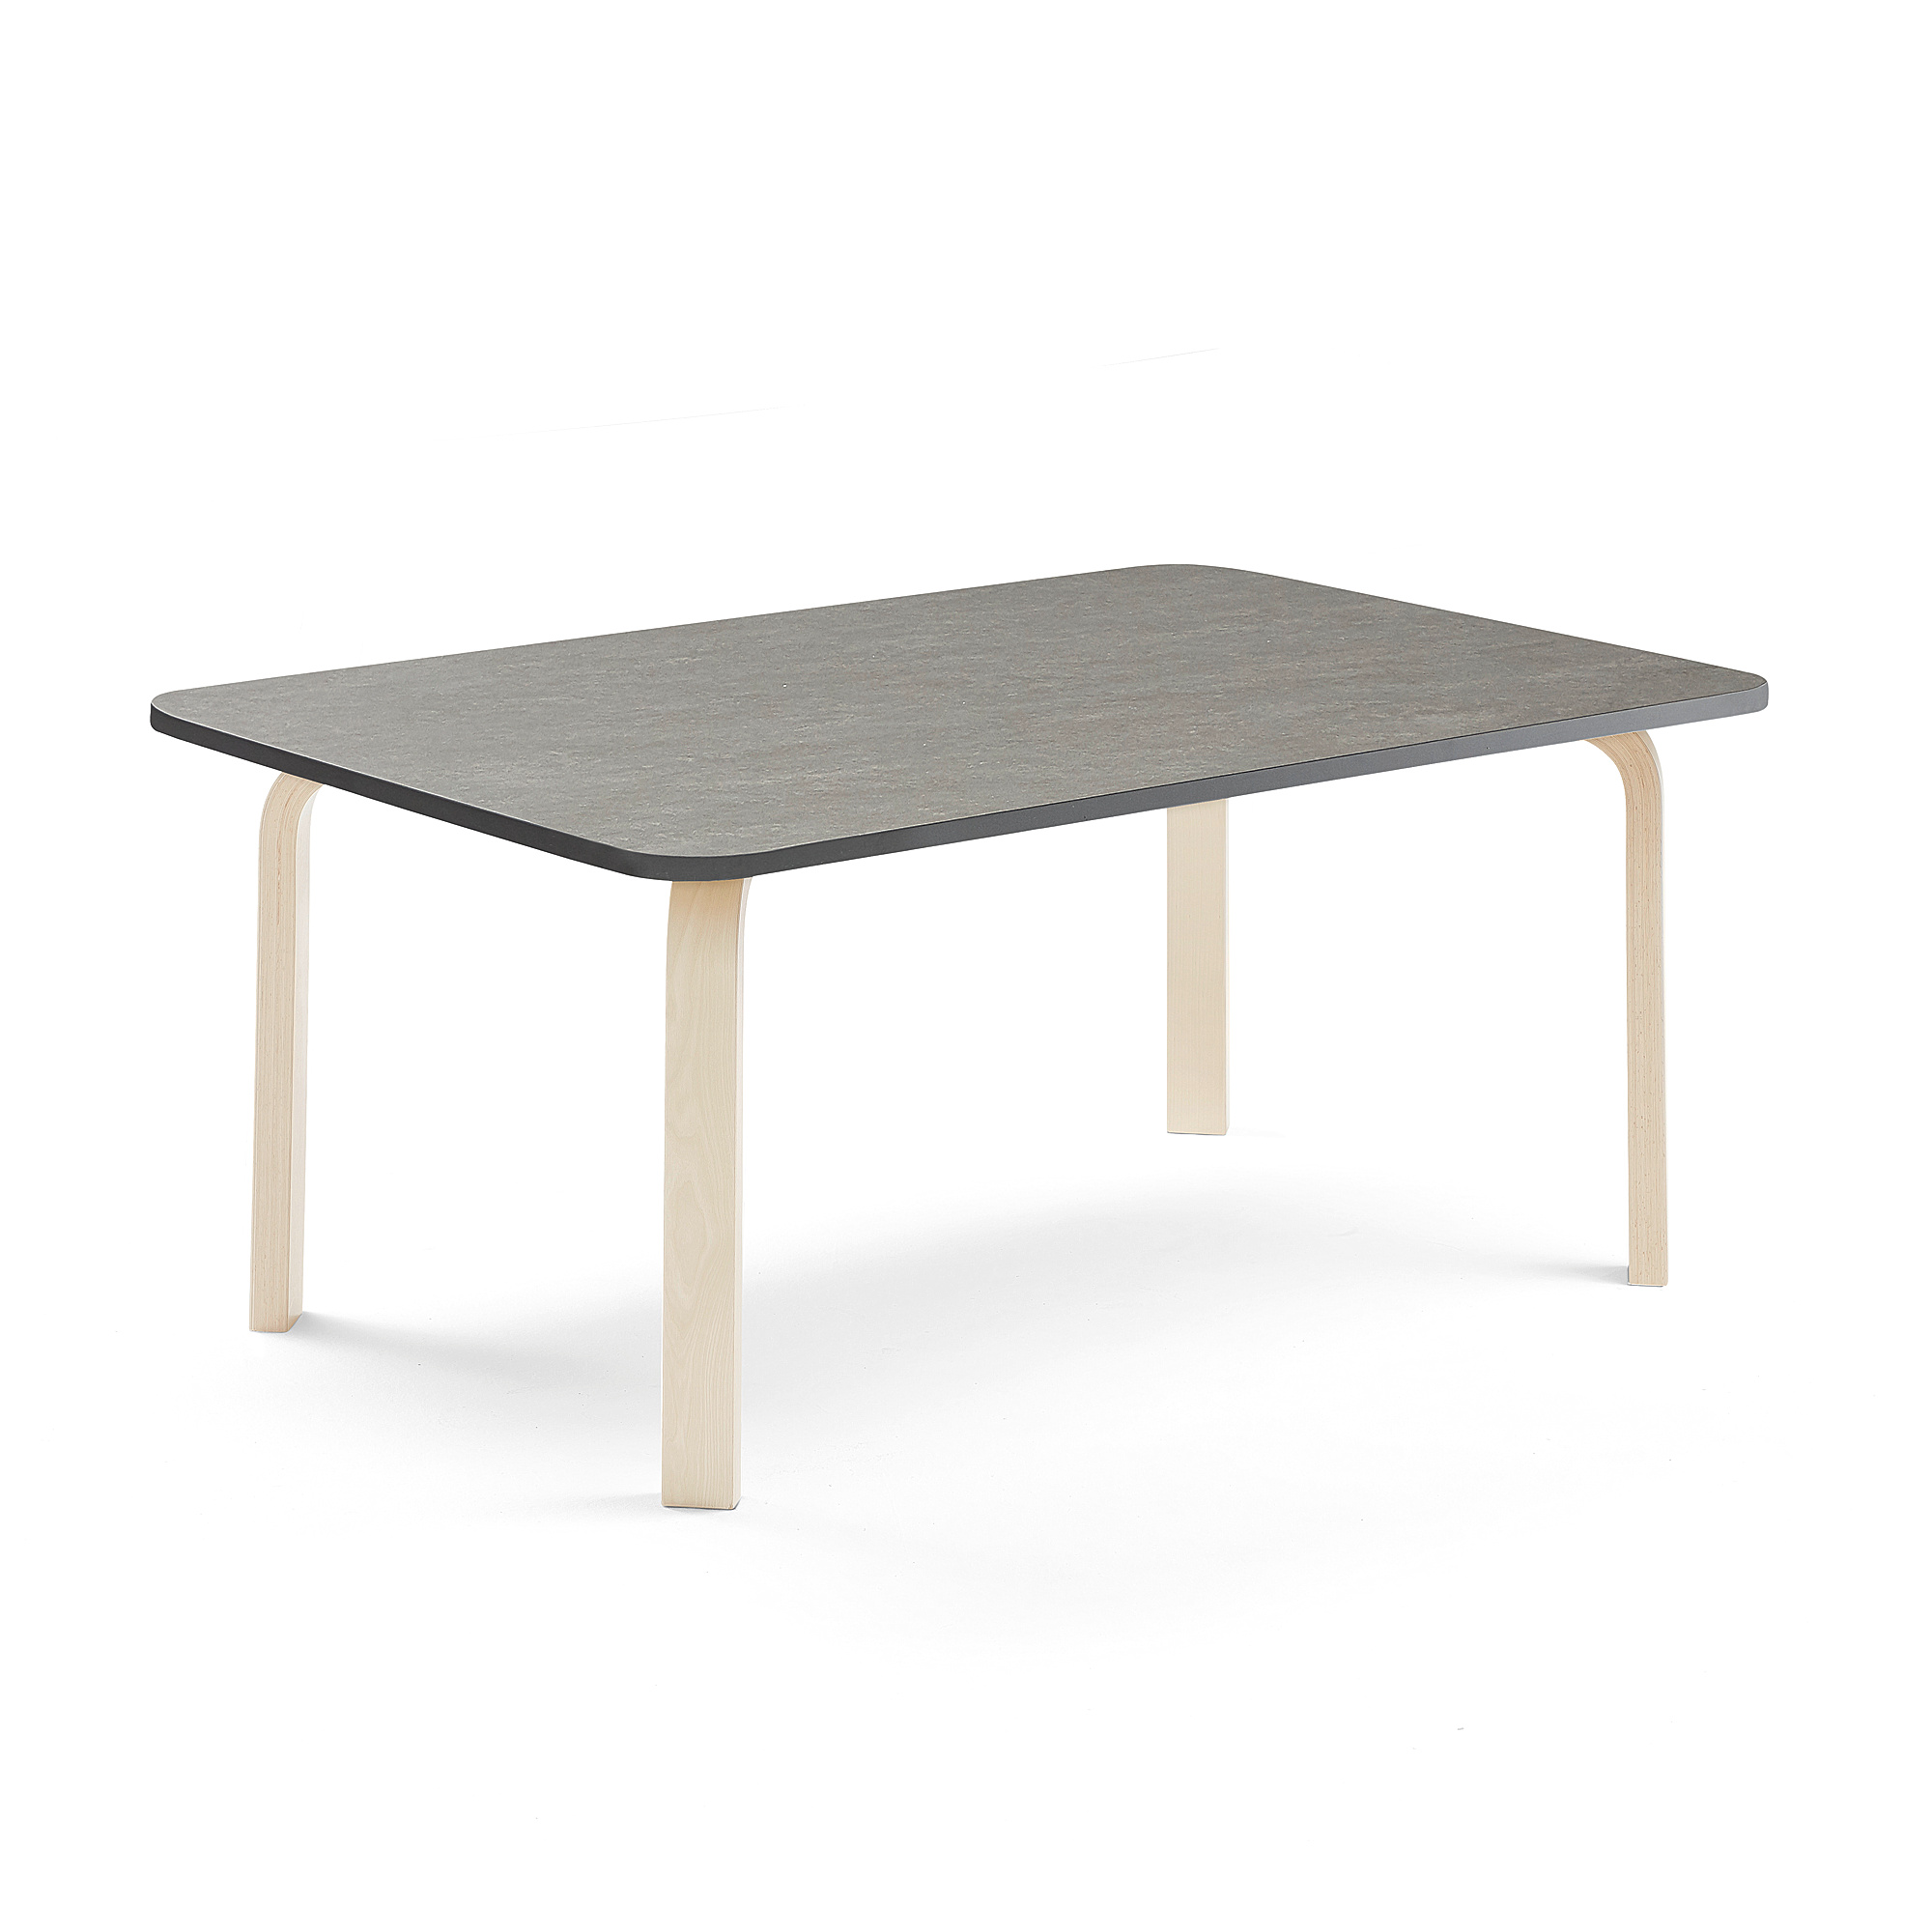 Stůl ELTON, 1400x700x530 mm, bříza, akustické linoleum, tmavě šedá